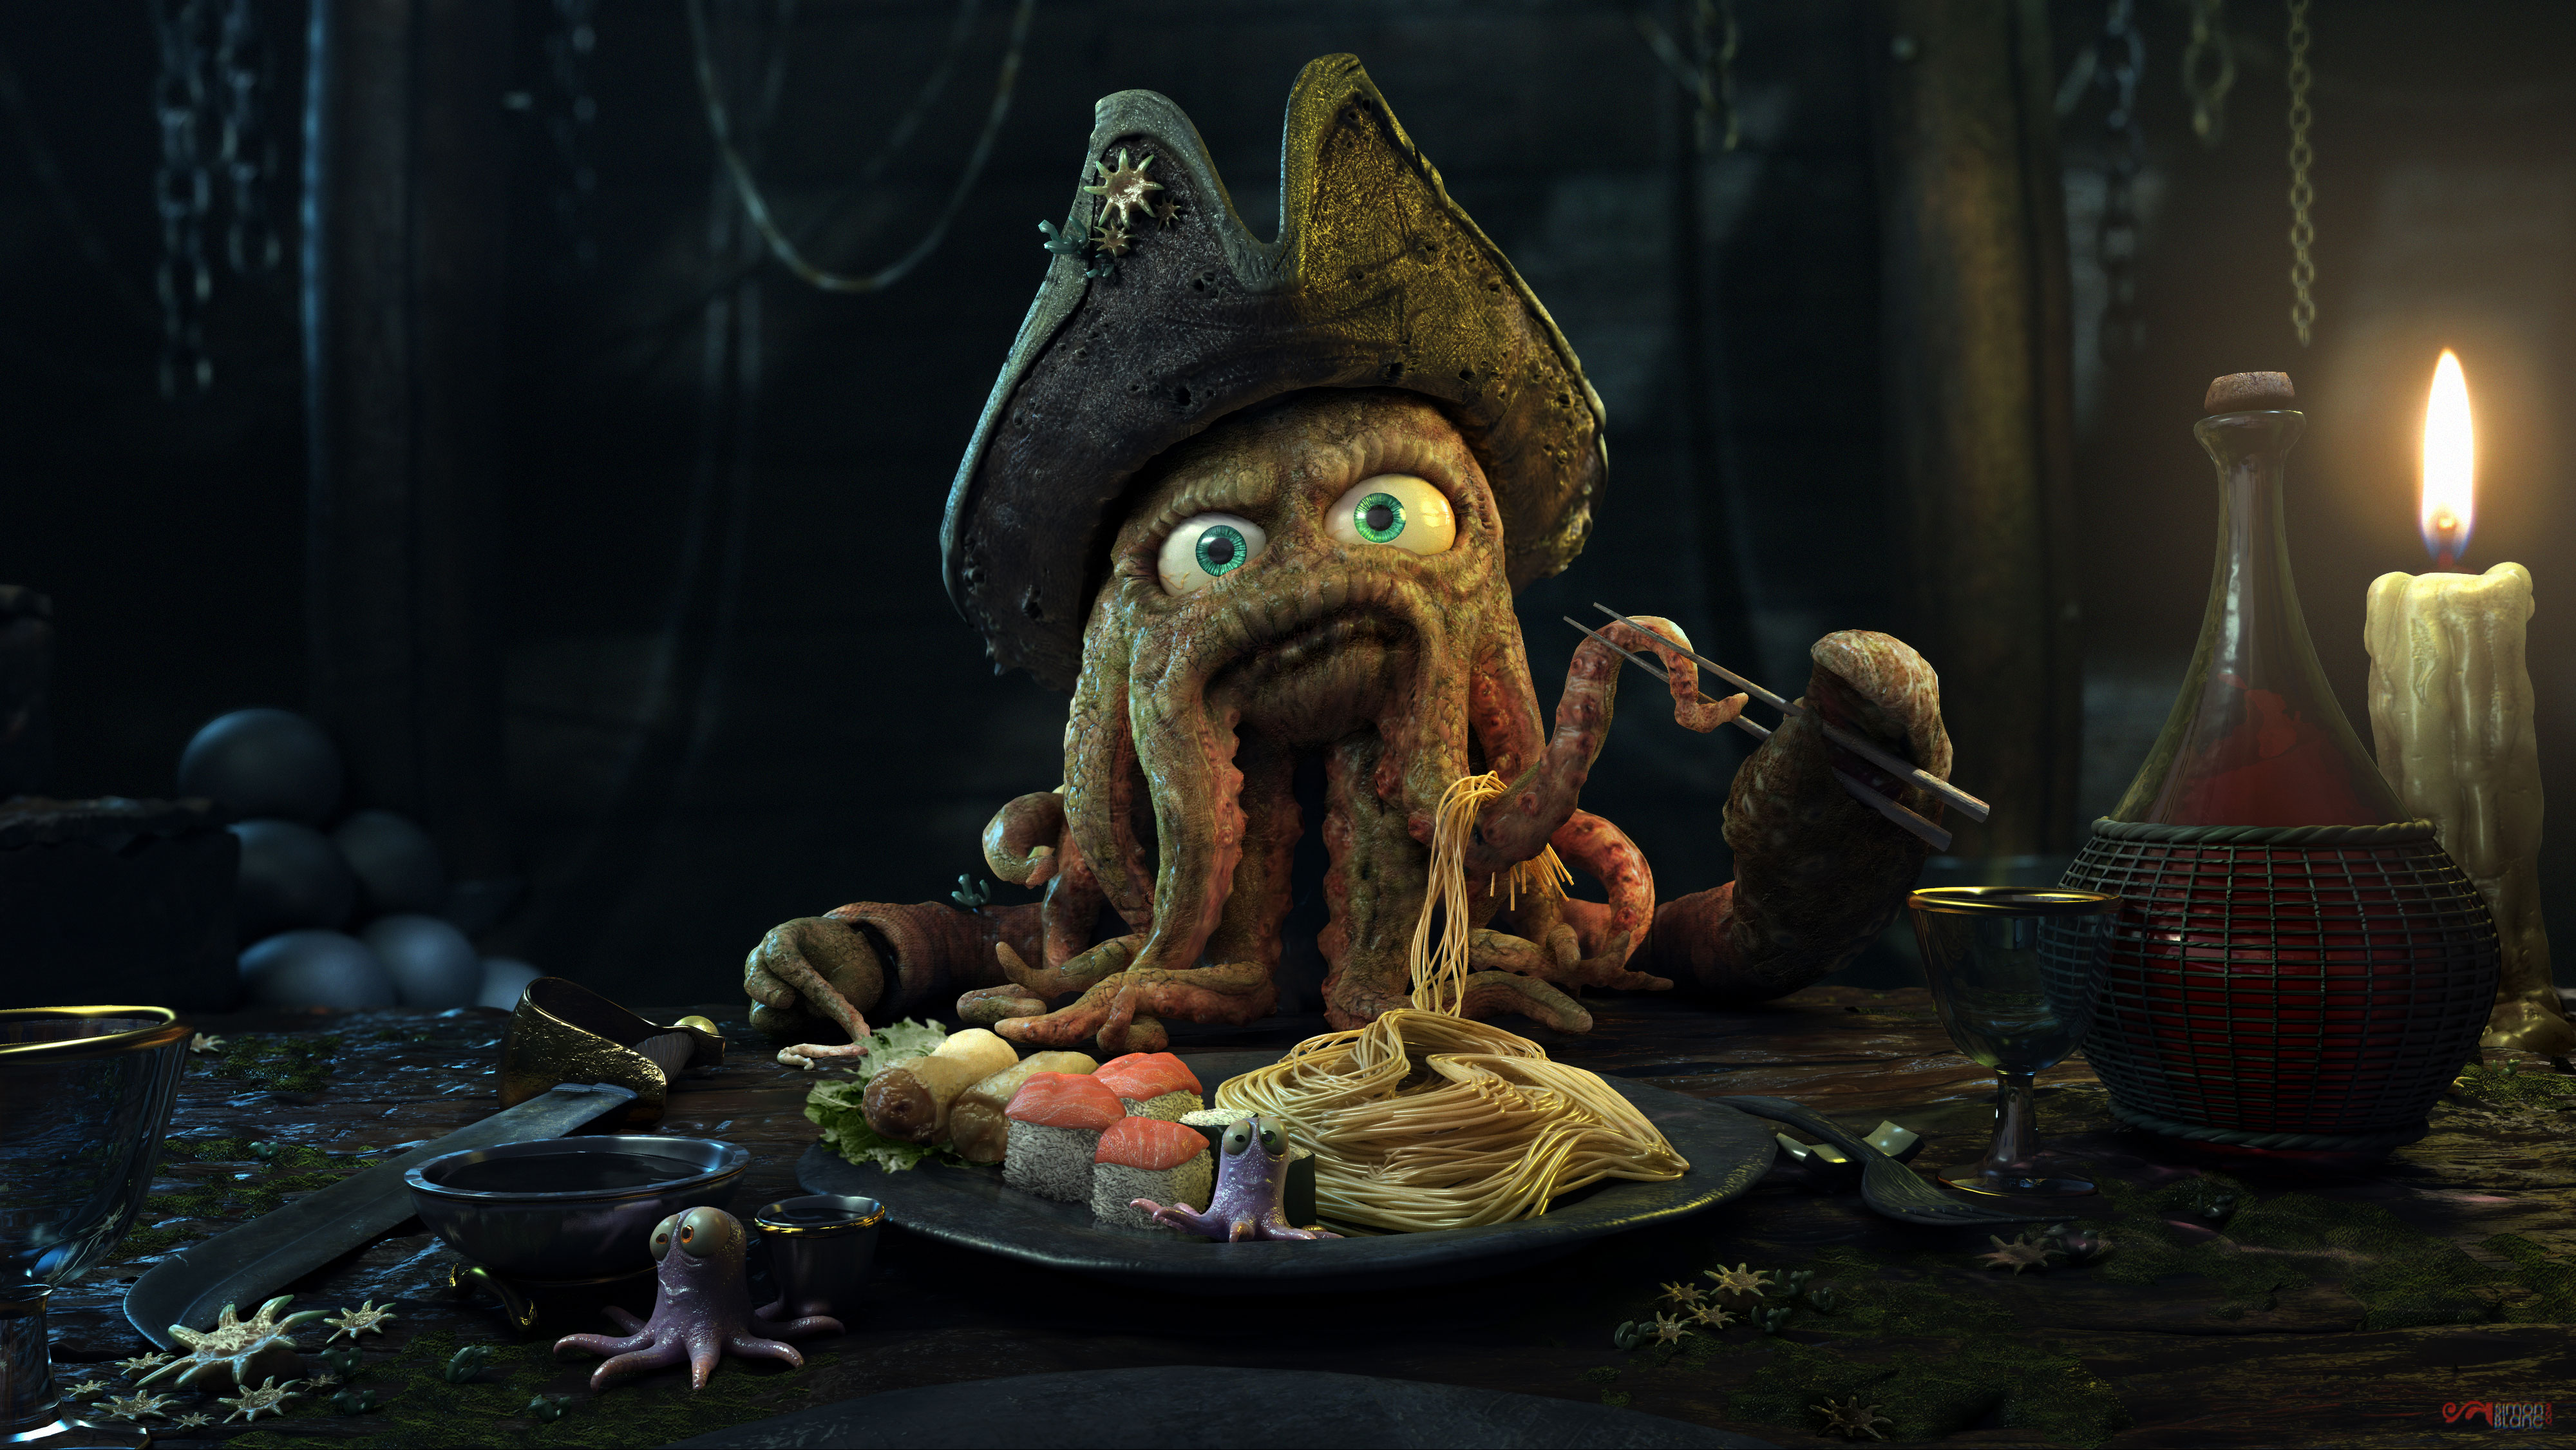 Pirates Humor Fantasy Art Tentacles Spaghetti Sushi Digital Art Render CGi 3D 4000x2251